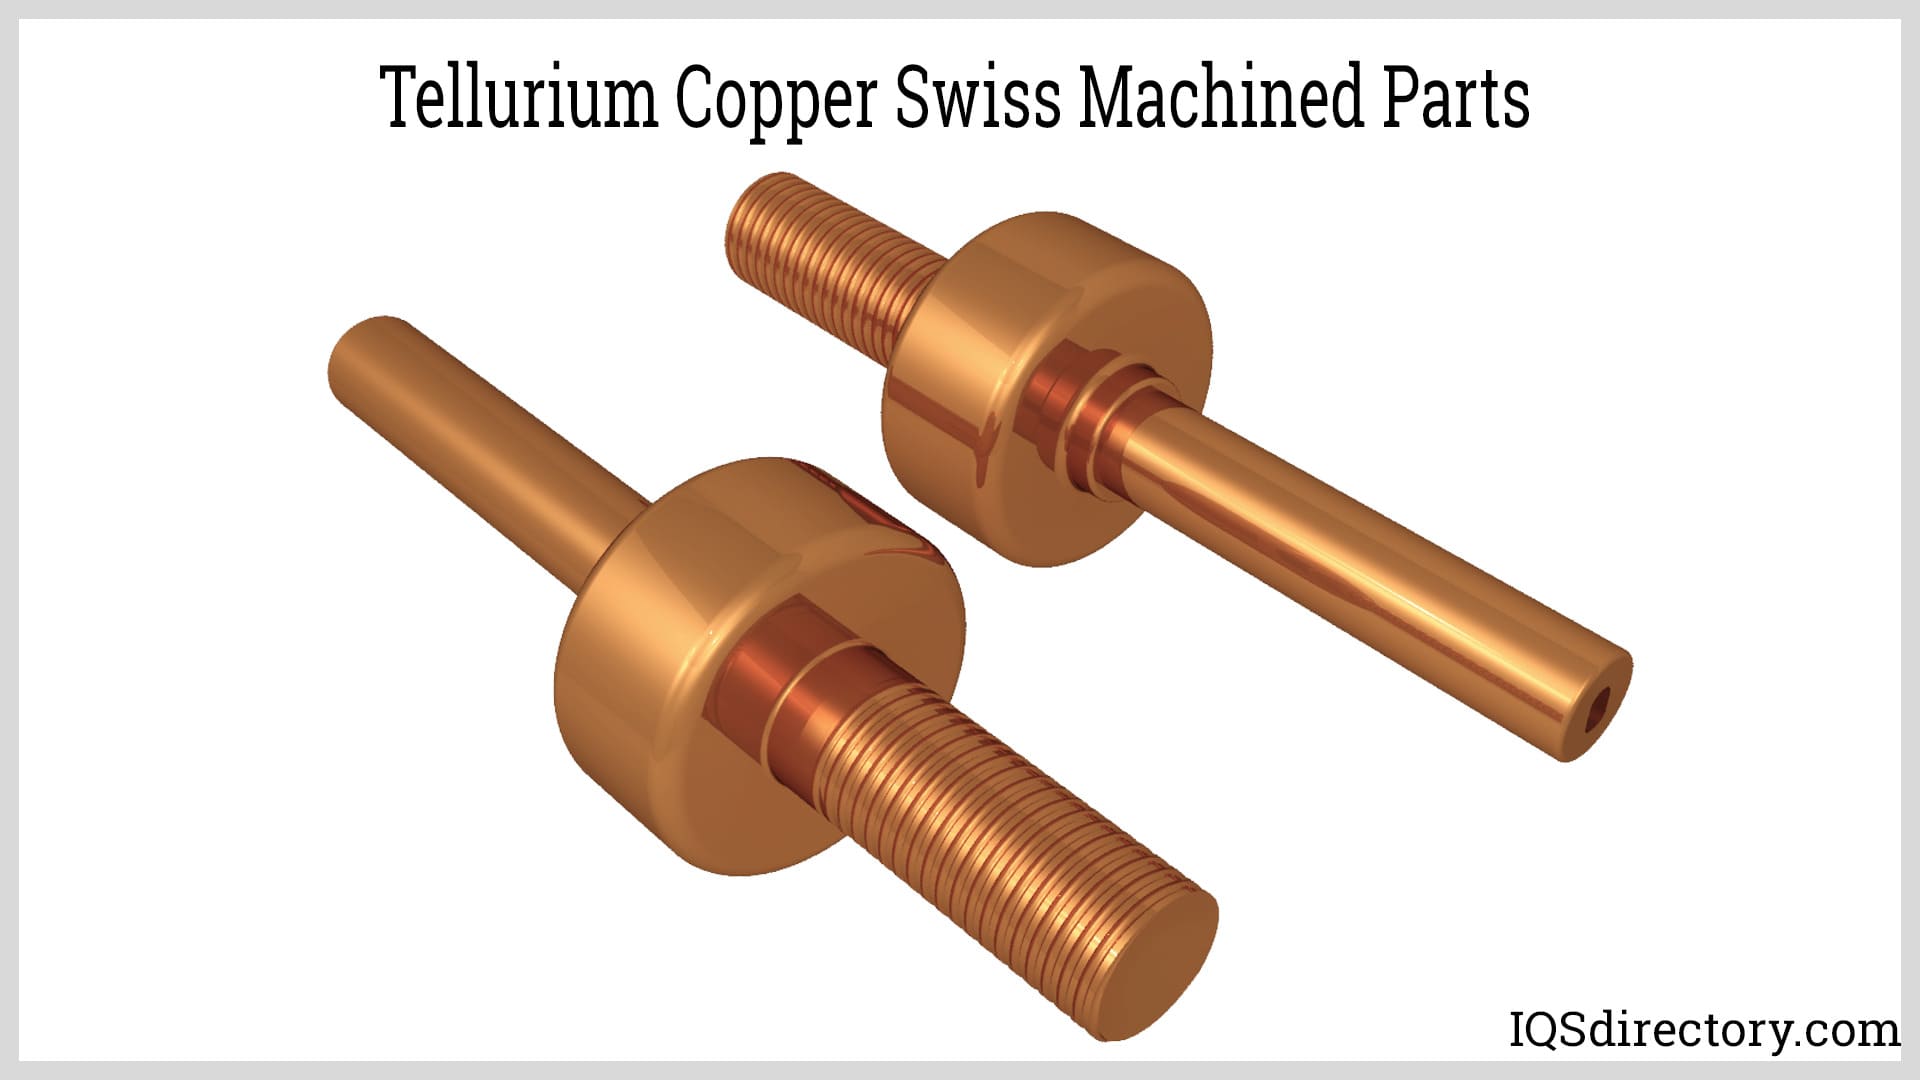 Tellurium Copper Swiss Machined Parts